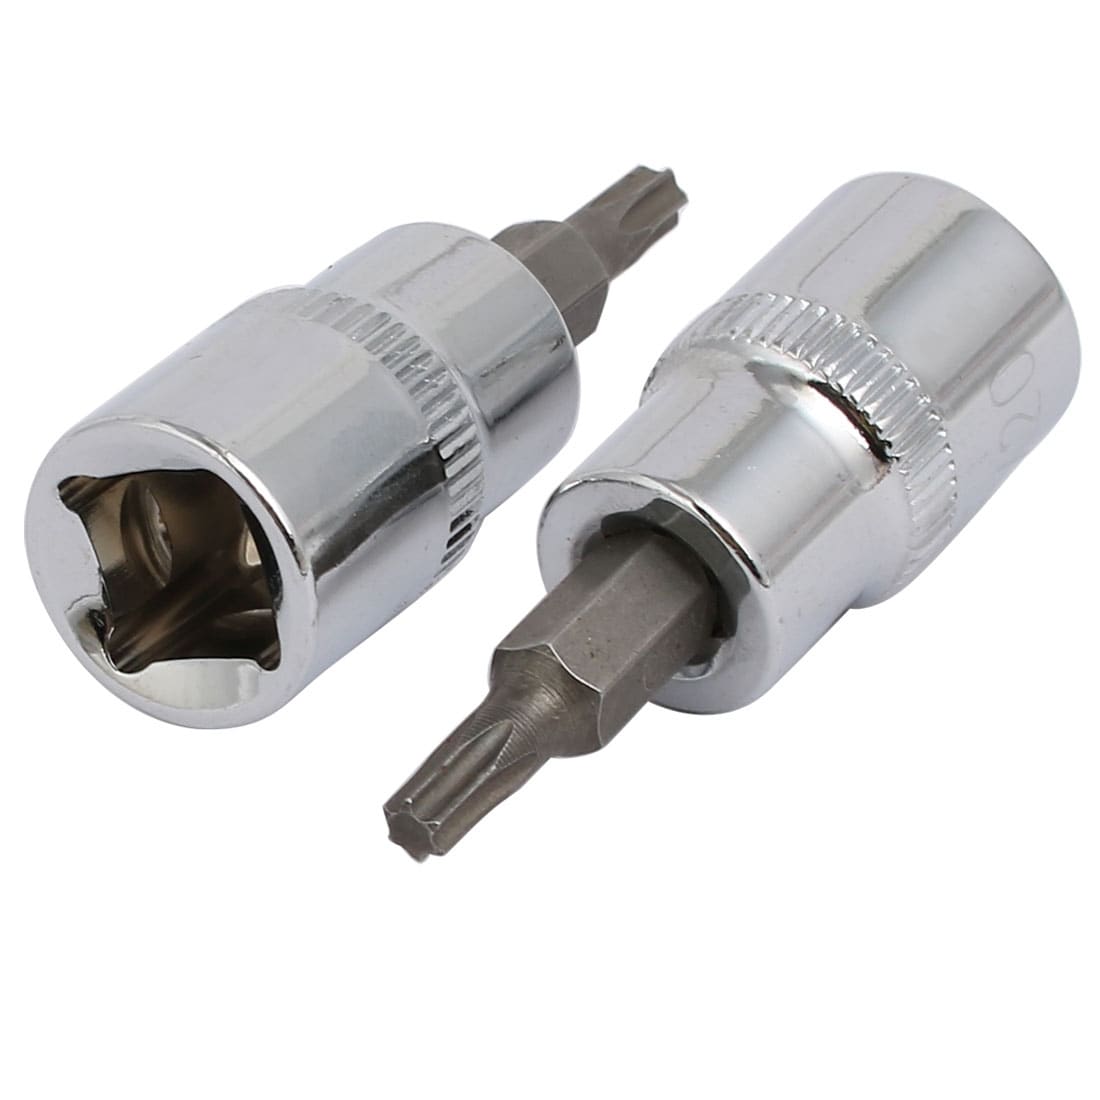 2pcs Chrome Vanadium Steel Socket Adapter Hand Tools 3/8 to 1/4 & 1/4 to 3/8